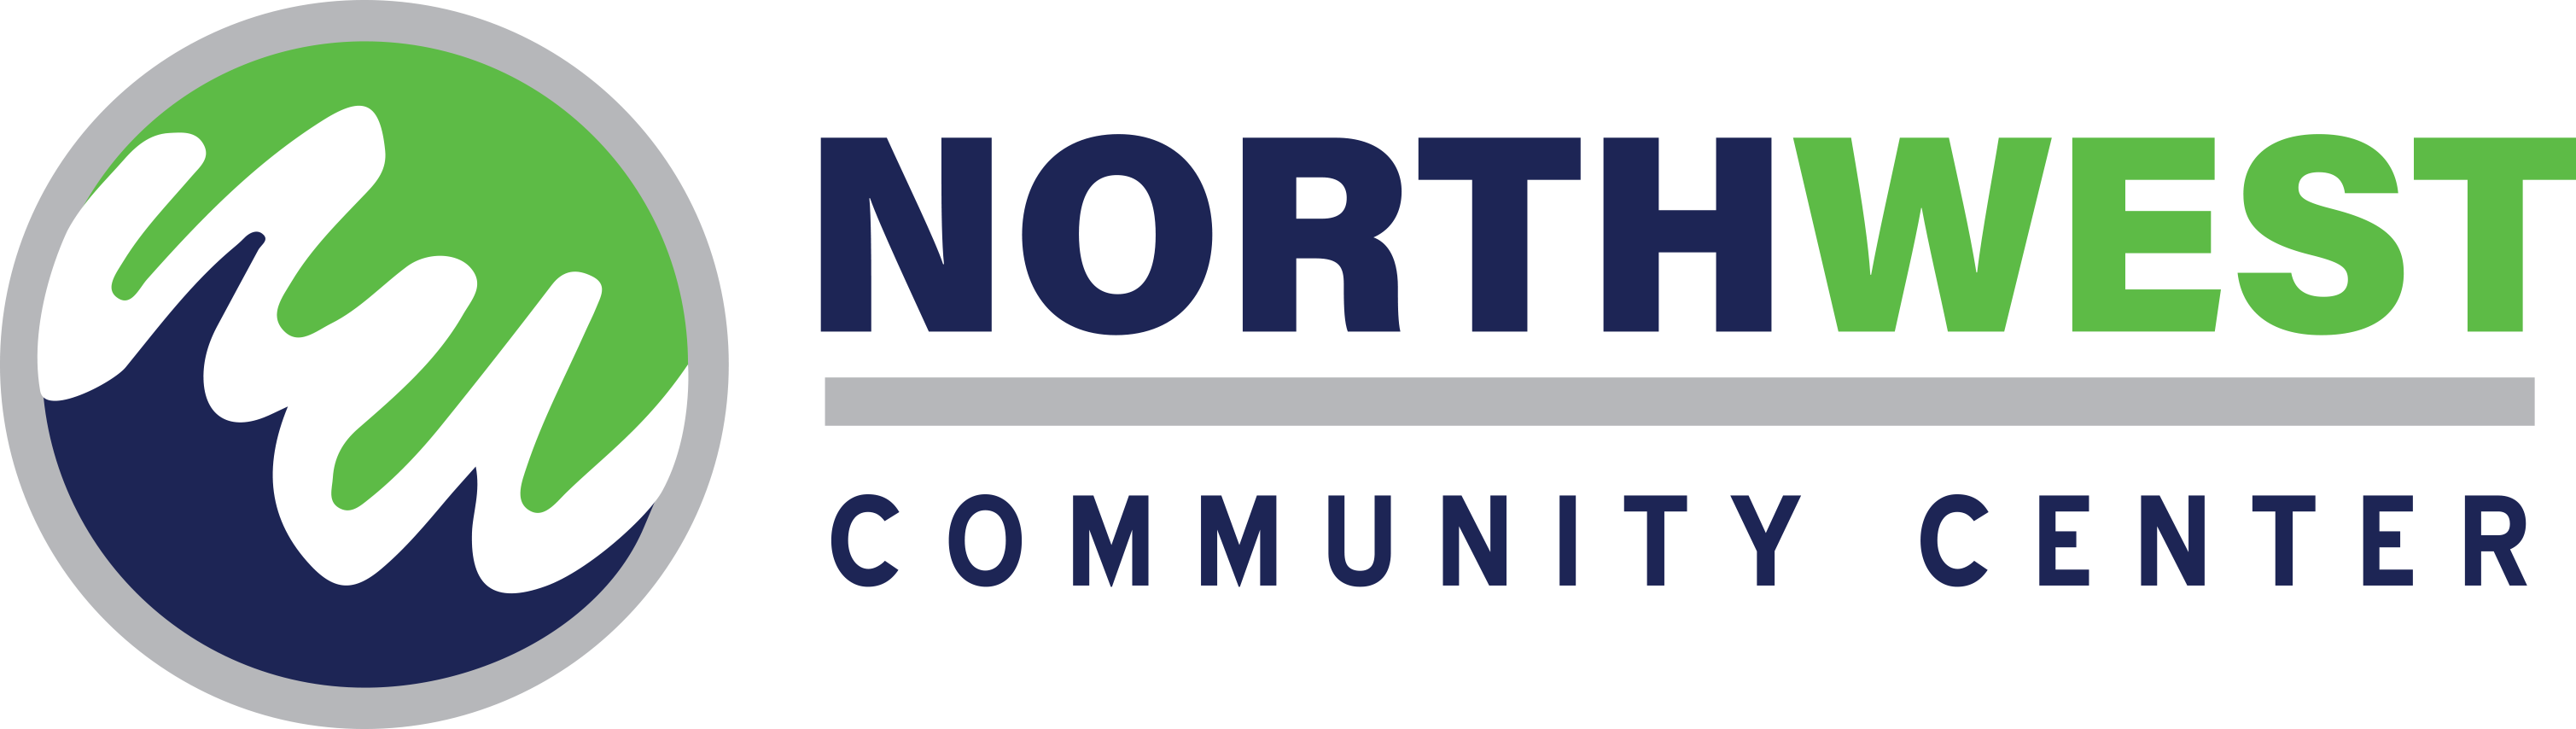 Northwest Community Center